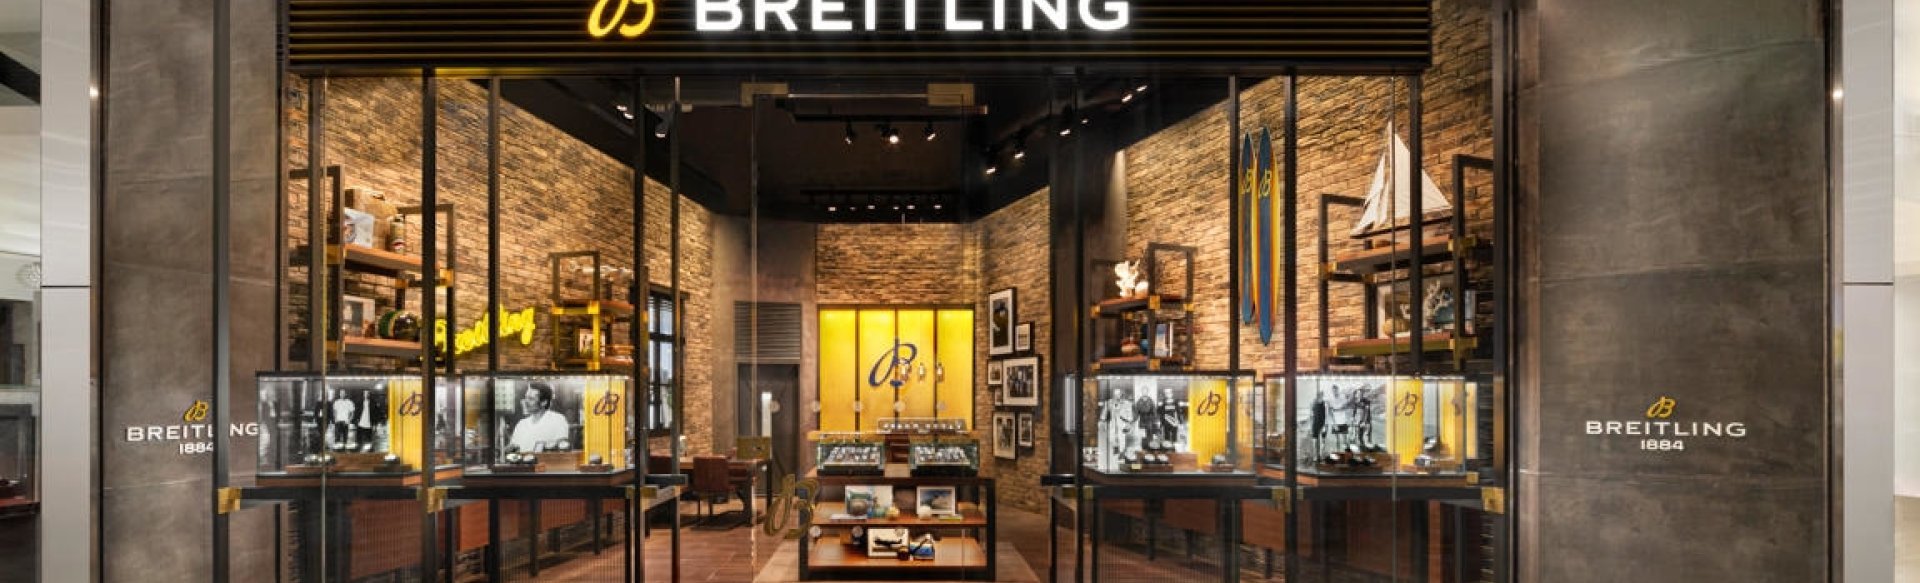 Breitling Boutique London Stratford